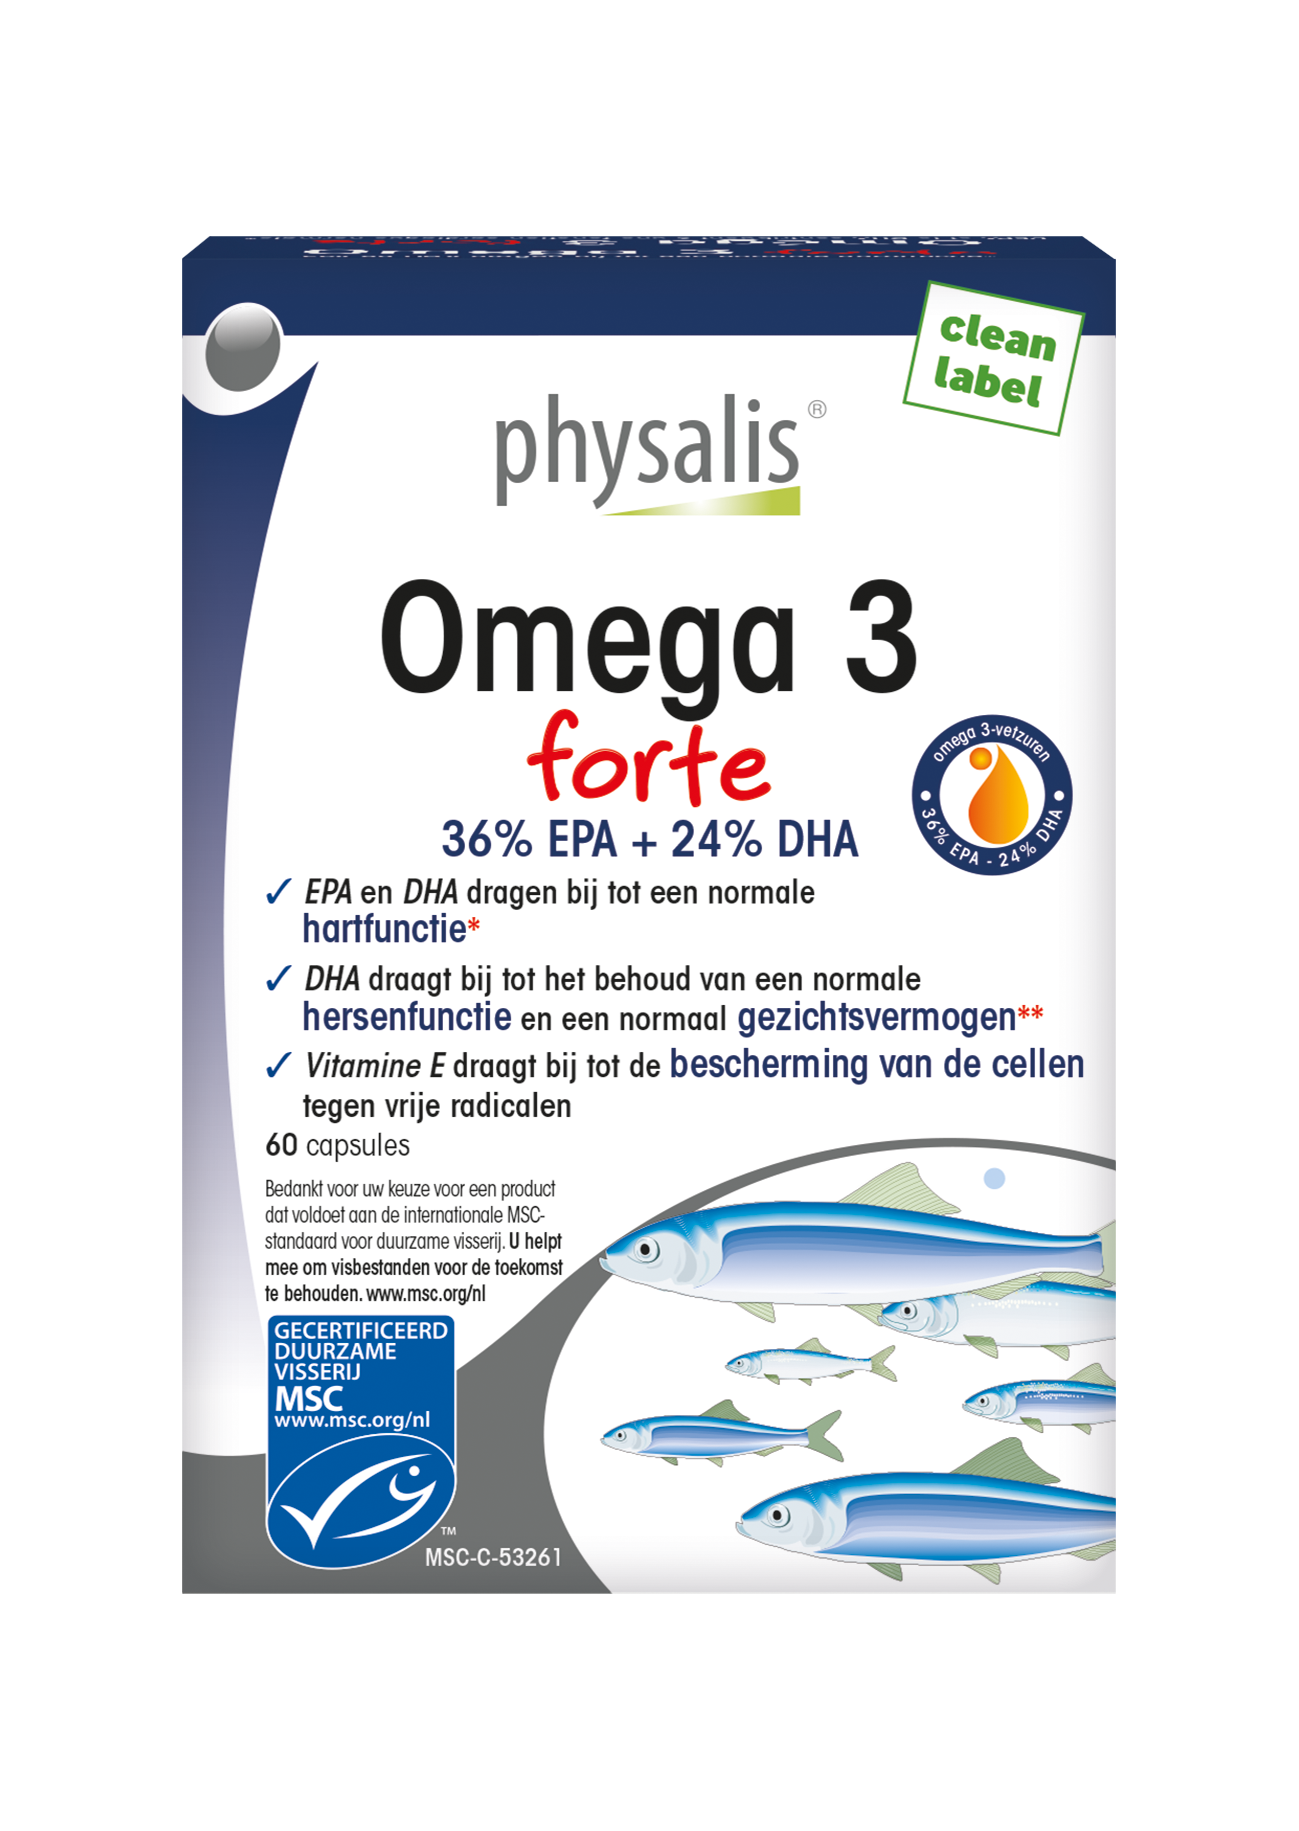 Physalis Omega 3 forte